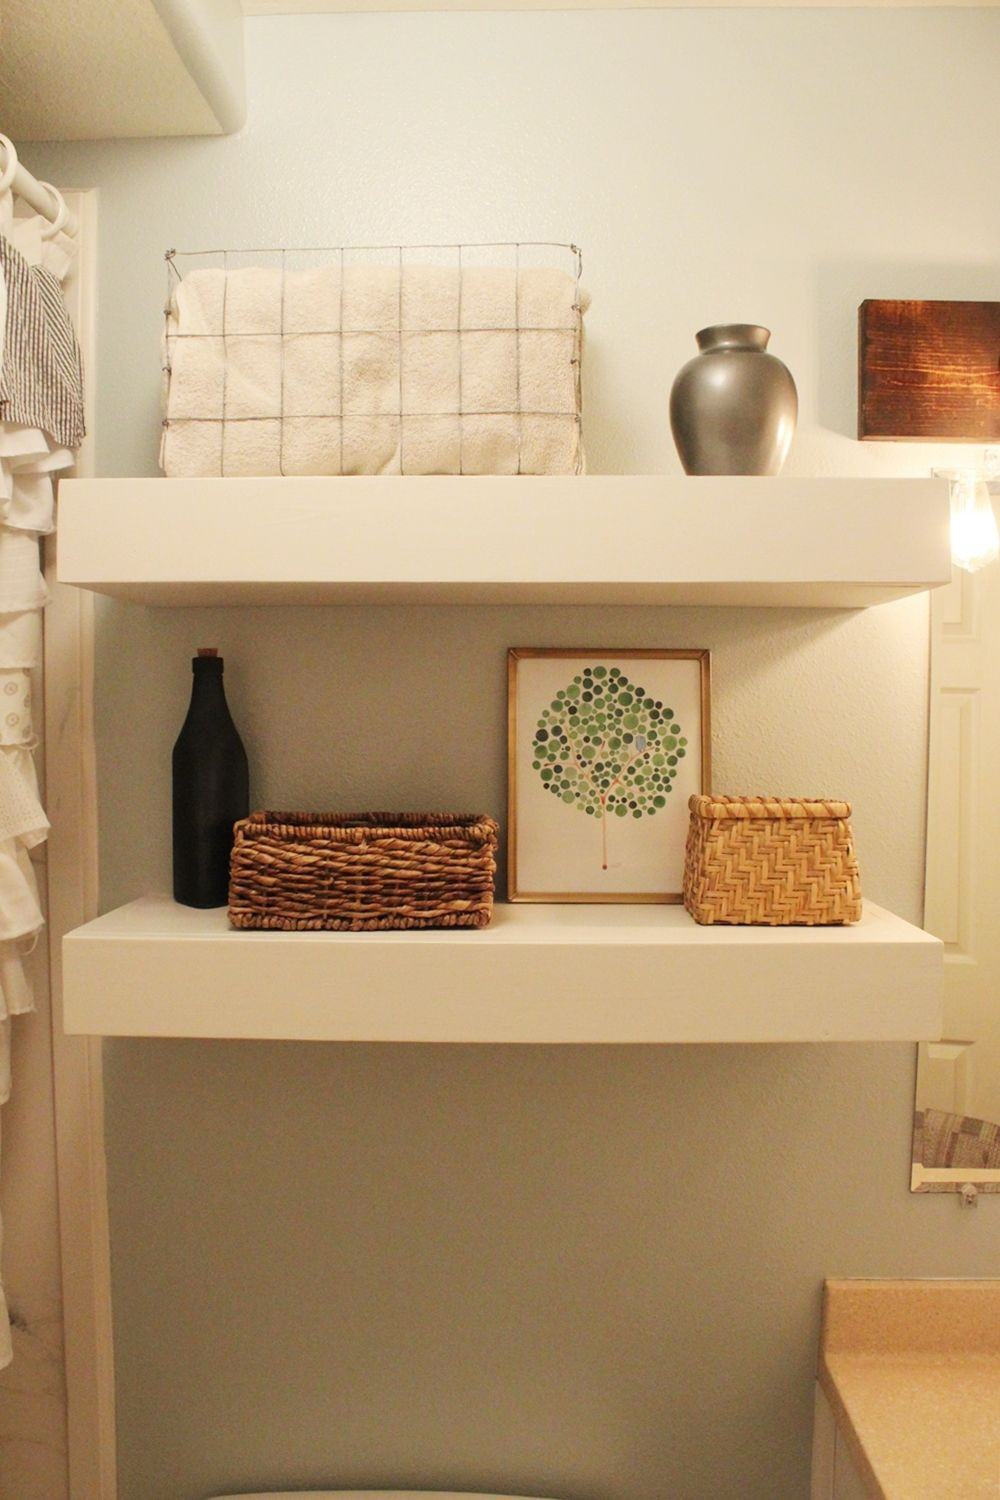 Best ideas about DIY Floating Shelves
. Save or Pin DIY Bathroom Floating Shelves Now.